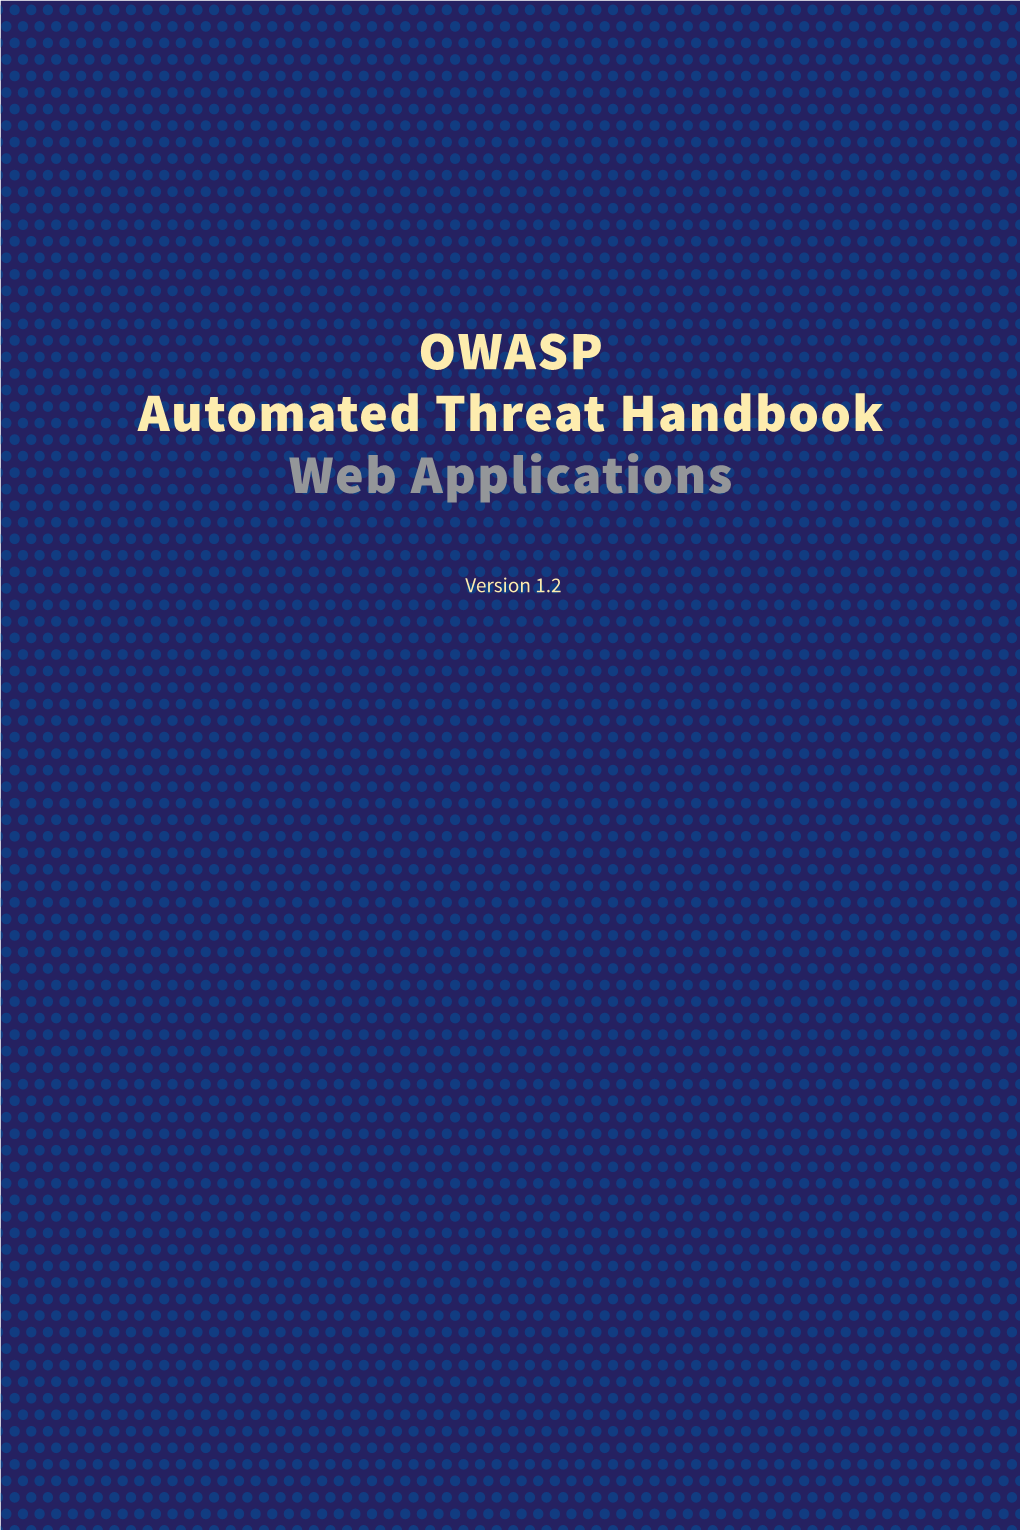 Automated Threat Handbook Web Applications